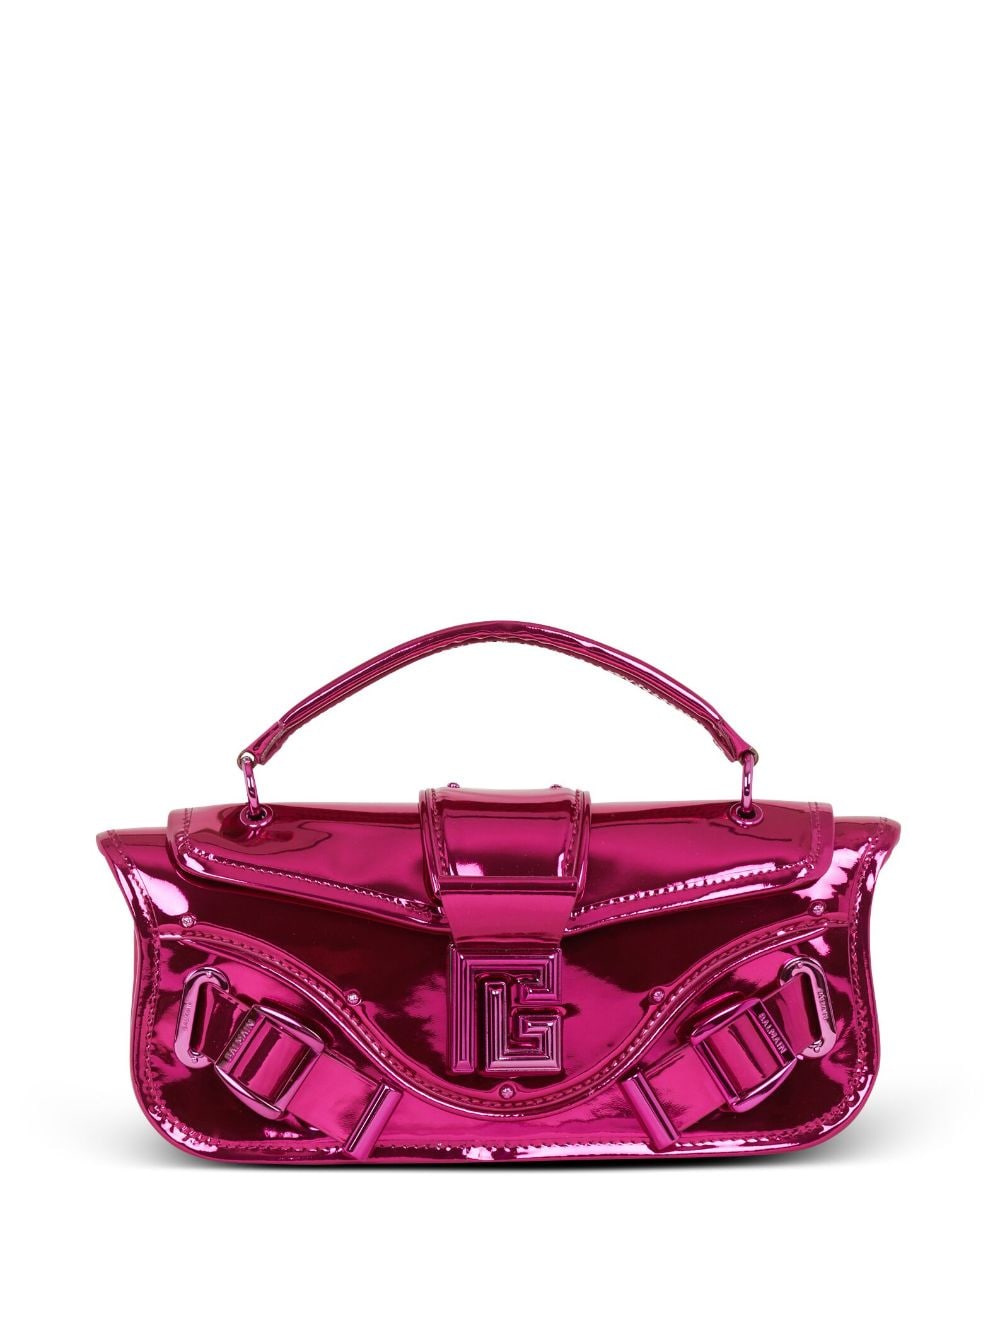 Balmain Blaze metallic leather clutch bag - Pink von Balmain